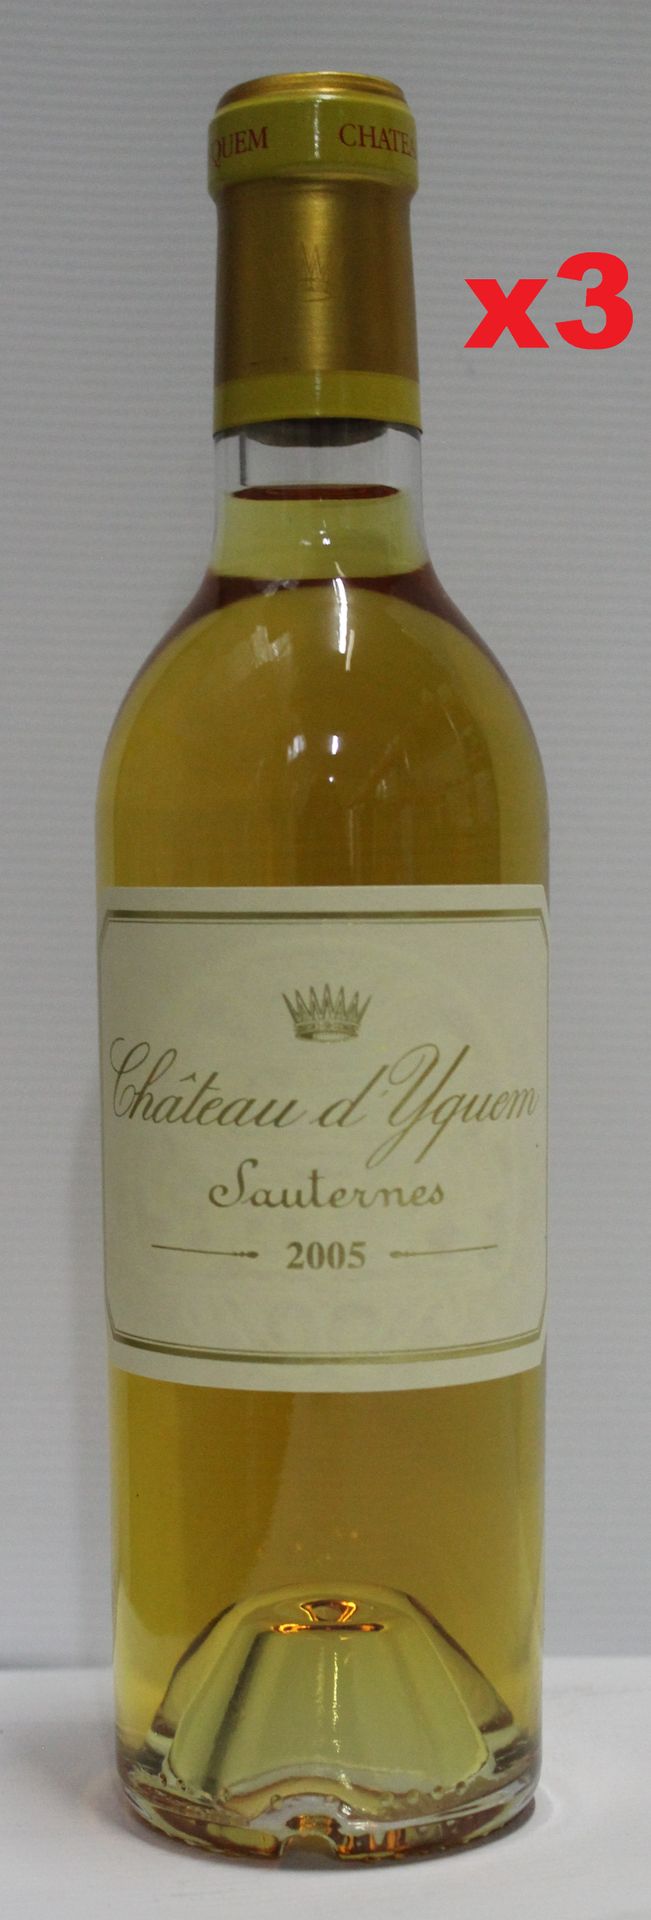 Null 3瓶37,5cl - 苏玳一级酒庄 - 伊甘酒庄 - 2005年甜白葡萄酒

瓶子完美地保存在理想的温度下。